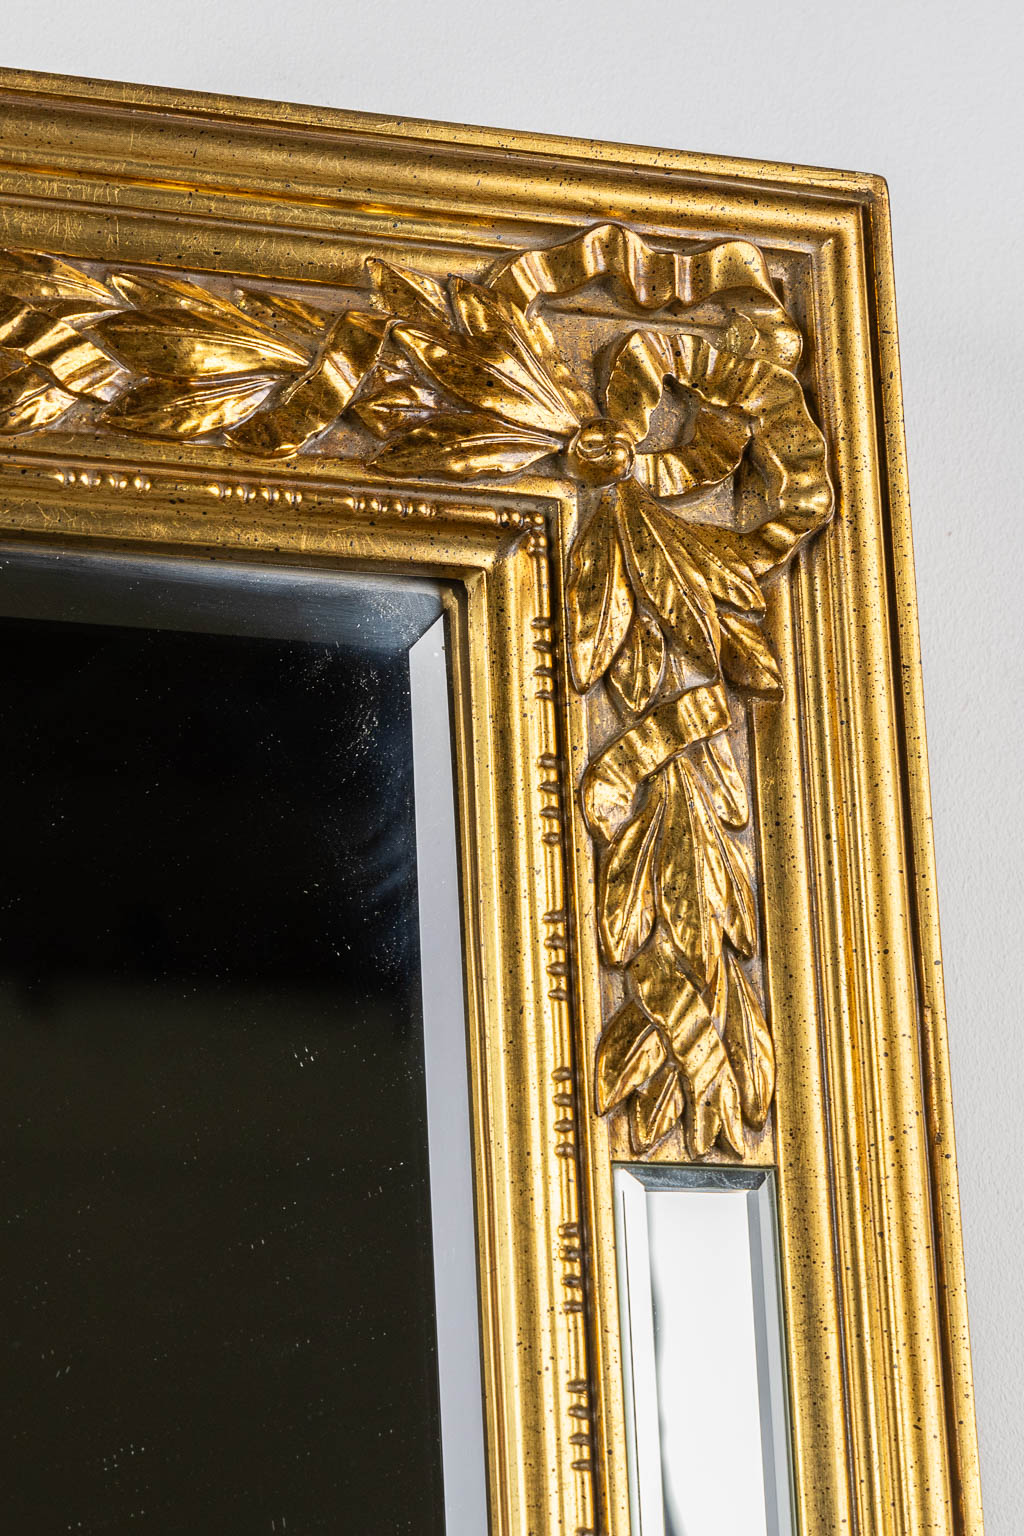 Deknudt, two large rectangular mirrors. Gilt wood. (W:128 x H:90 cm)